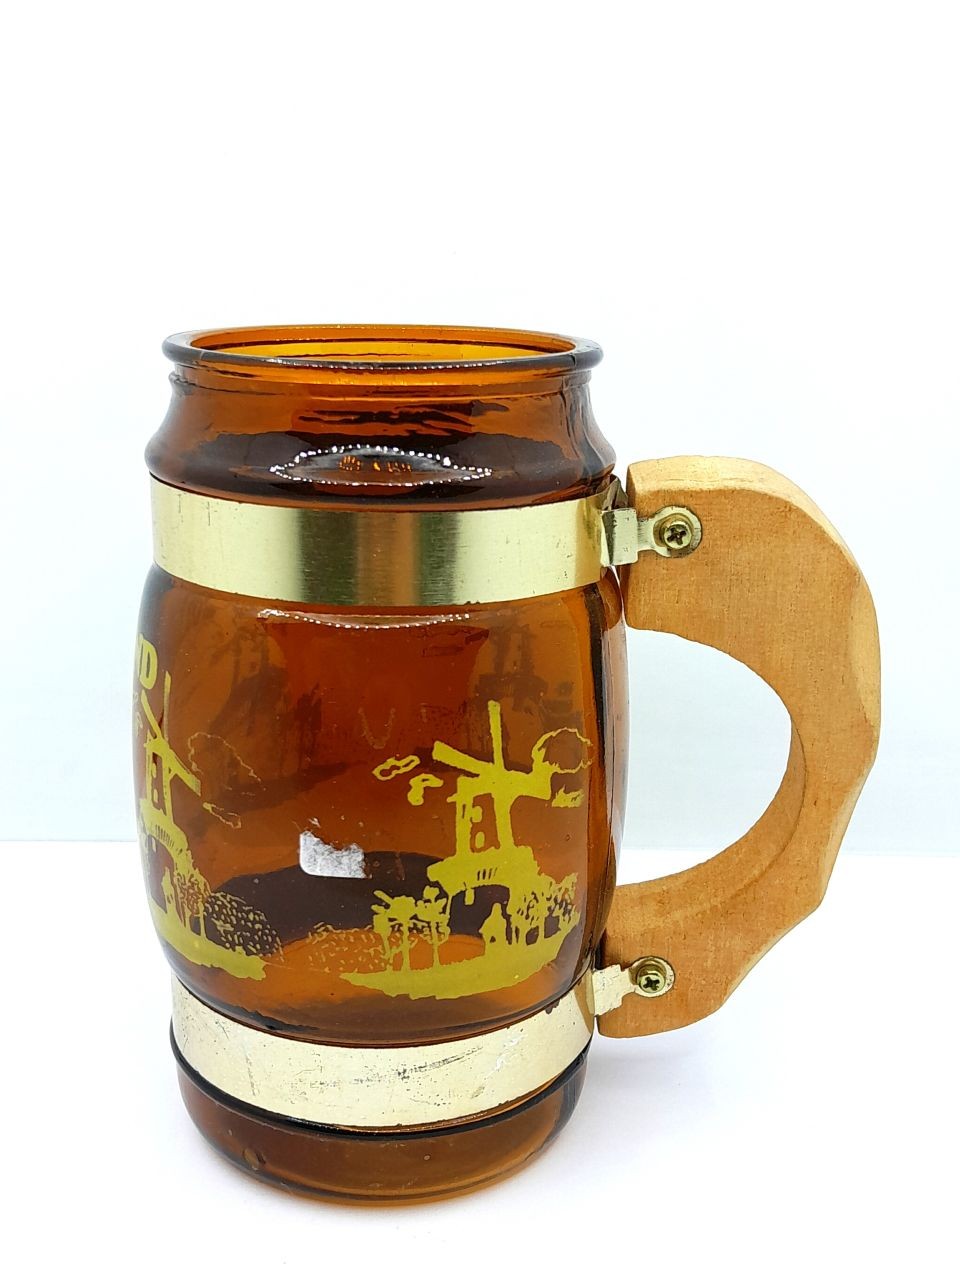 Glass mug from Holland